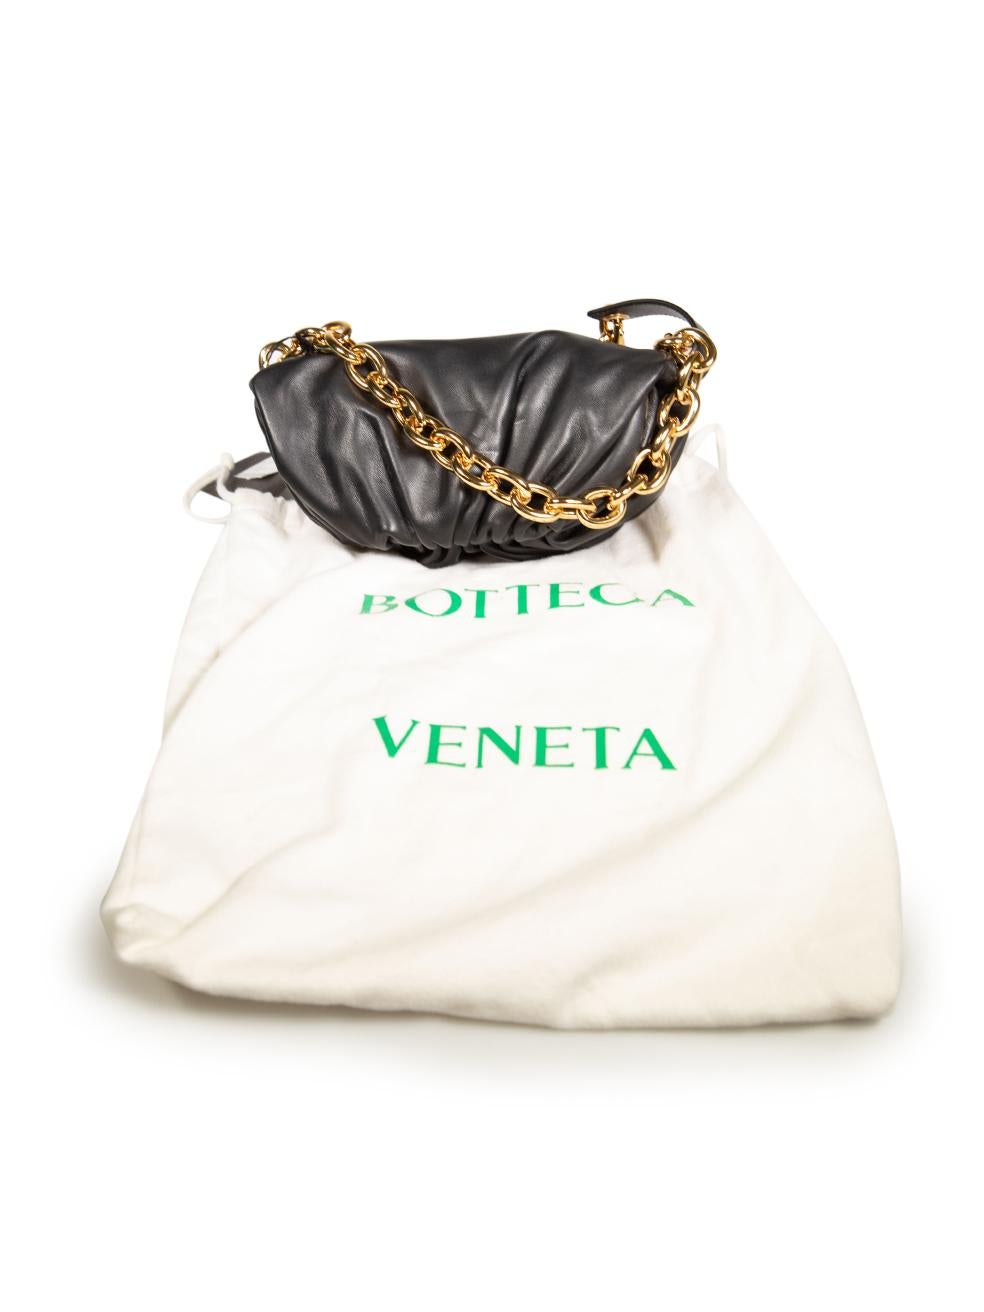 Bottega Veneta Black Leather Chain Pouch Crossbody Bag For Sale 4